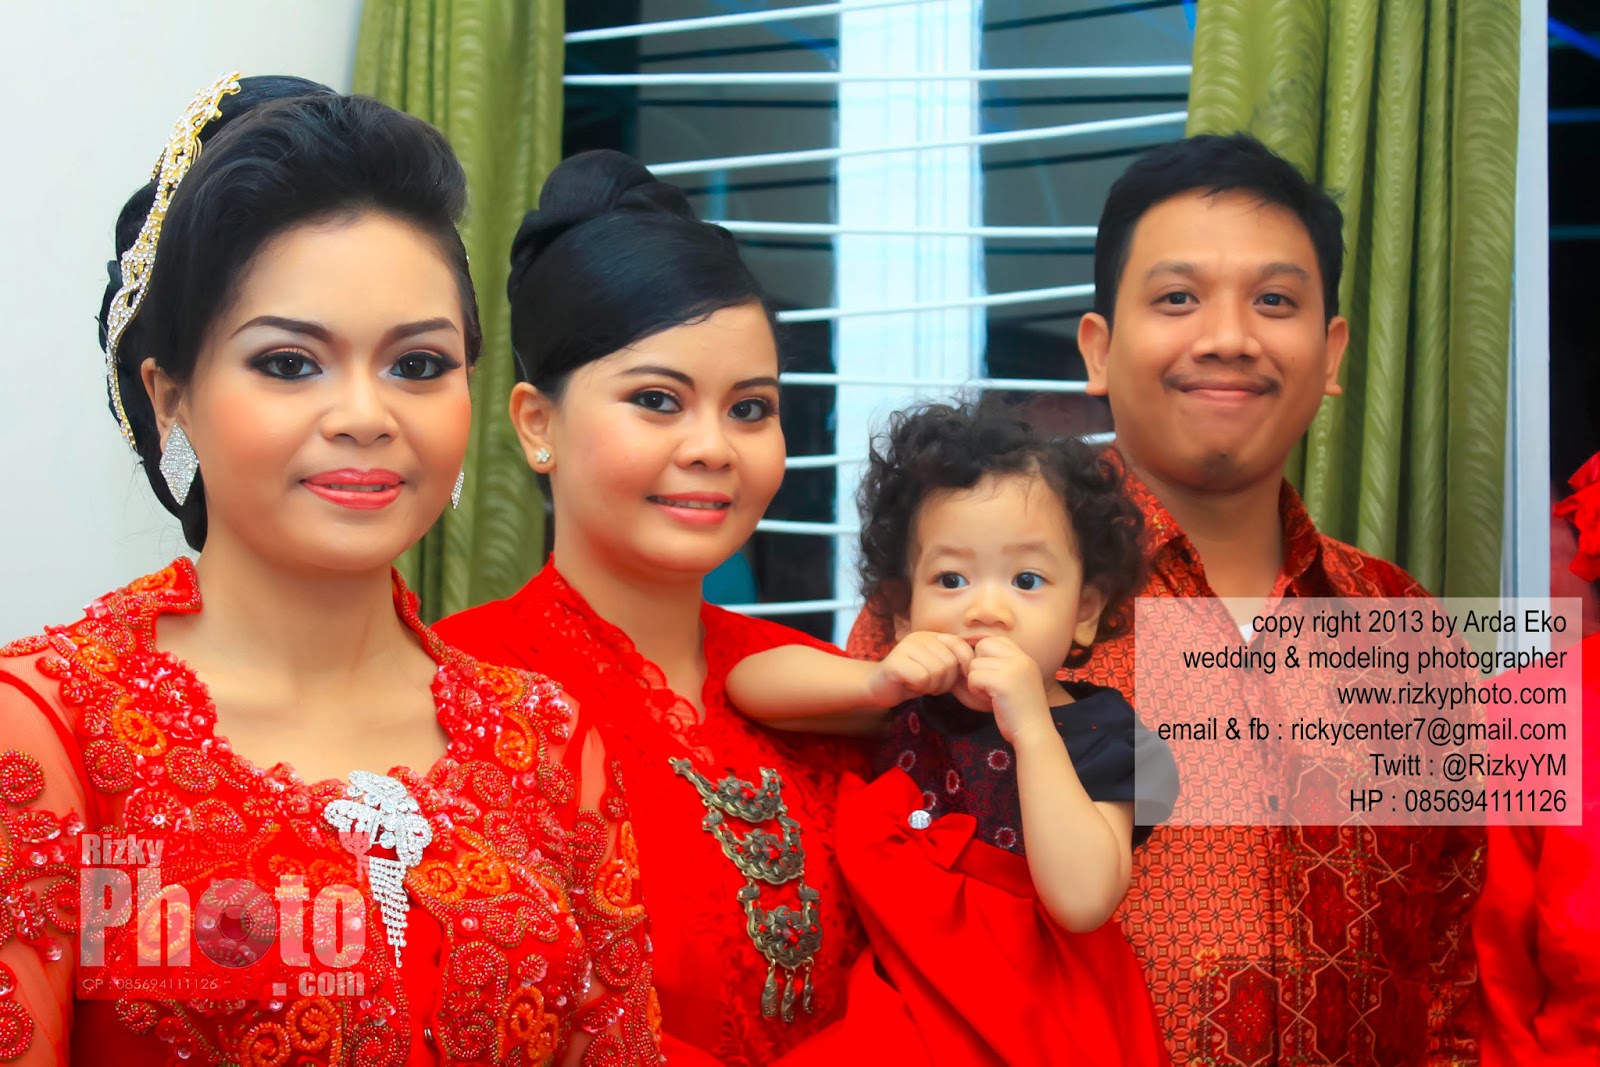 Jasa Fotografer Pre Wedding & Pernikahan Surabaya  foto pre wedding murah surabaya